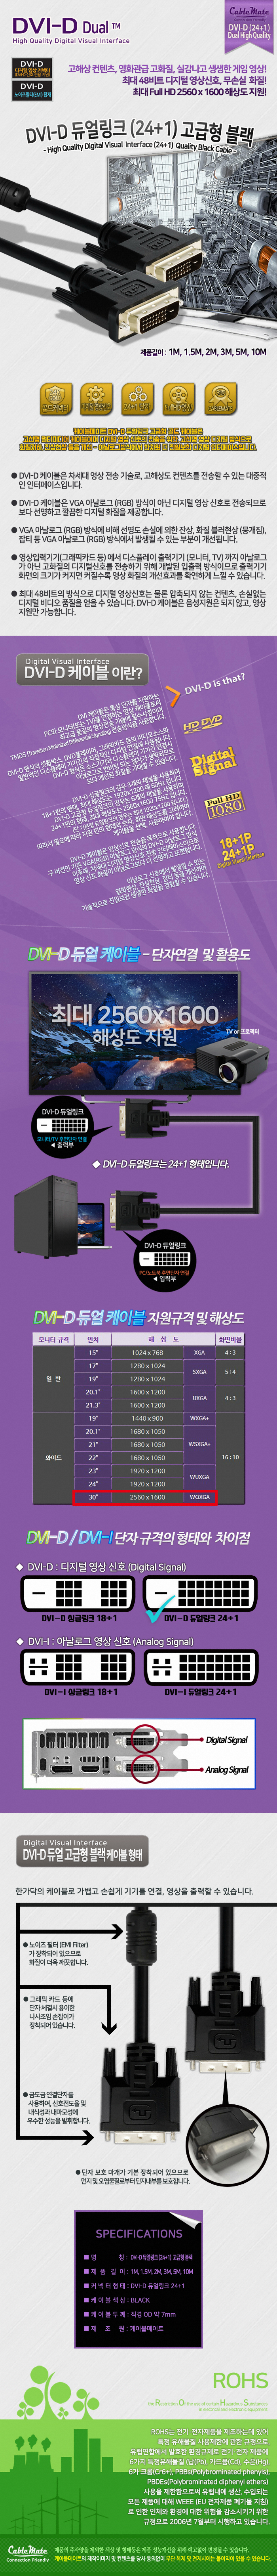 CABLEMATE DVI-D 듀얼링크 (24+1M24+1M) 고급형 블랙 케이블 (2m) 11.jpg